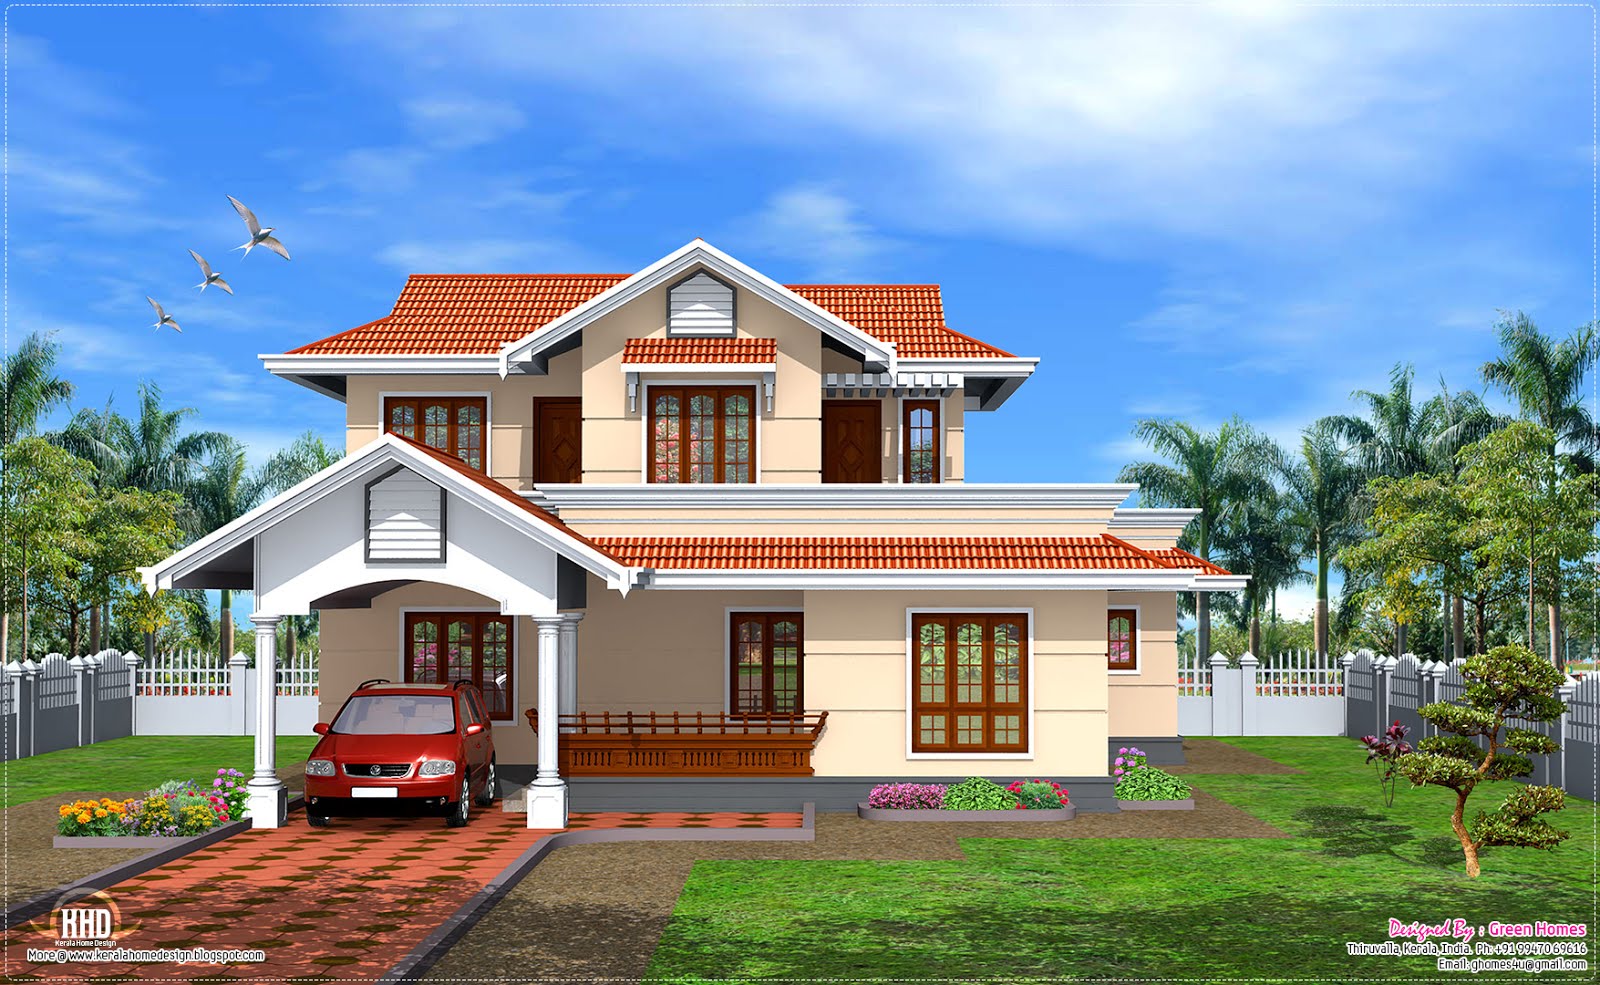  Kerala  model  1900 sq feet home  design House  Design Plans 